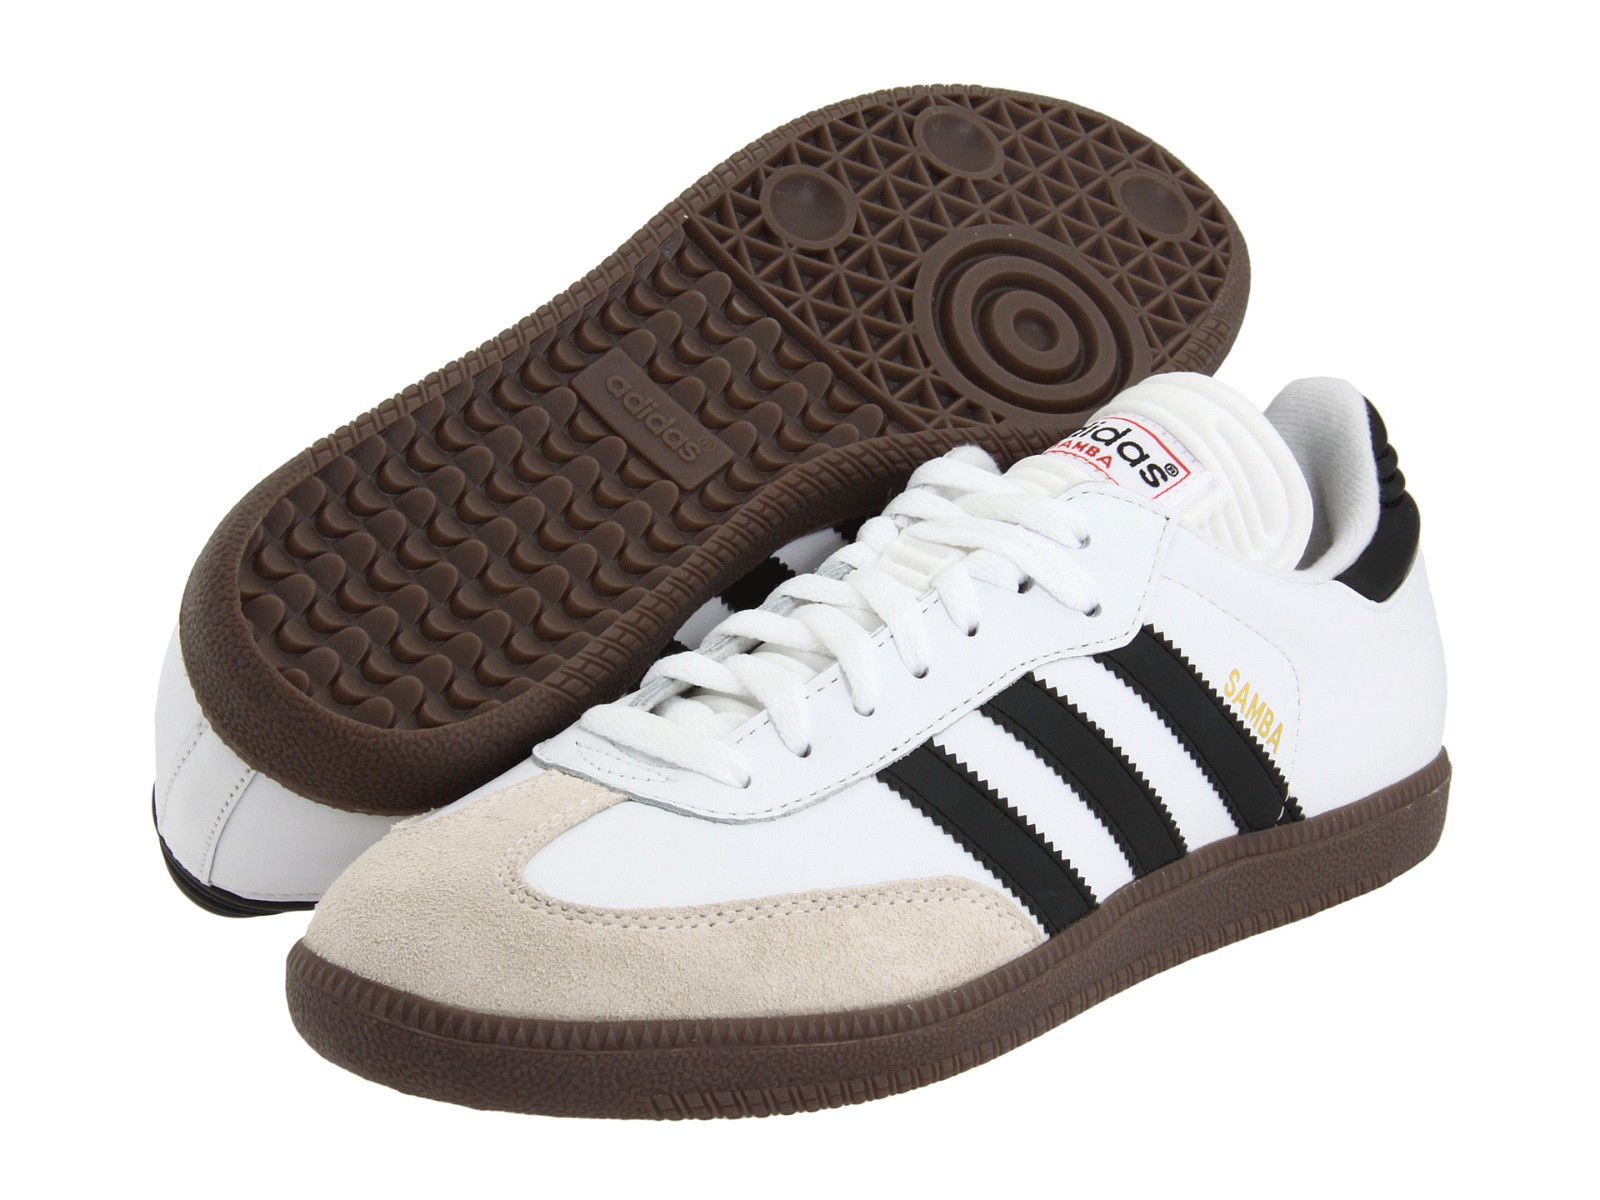 adidas Men's Samba Classic Soccer Shoe,Run White/Black/Run White,10 M US